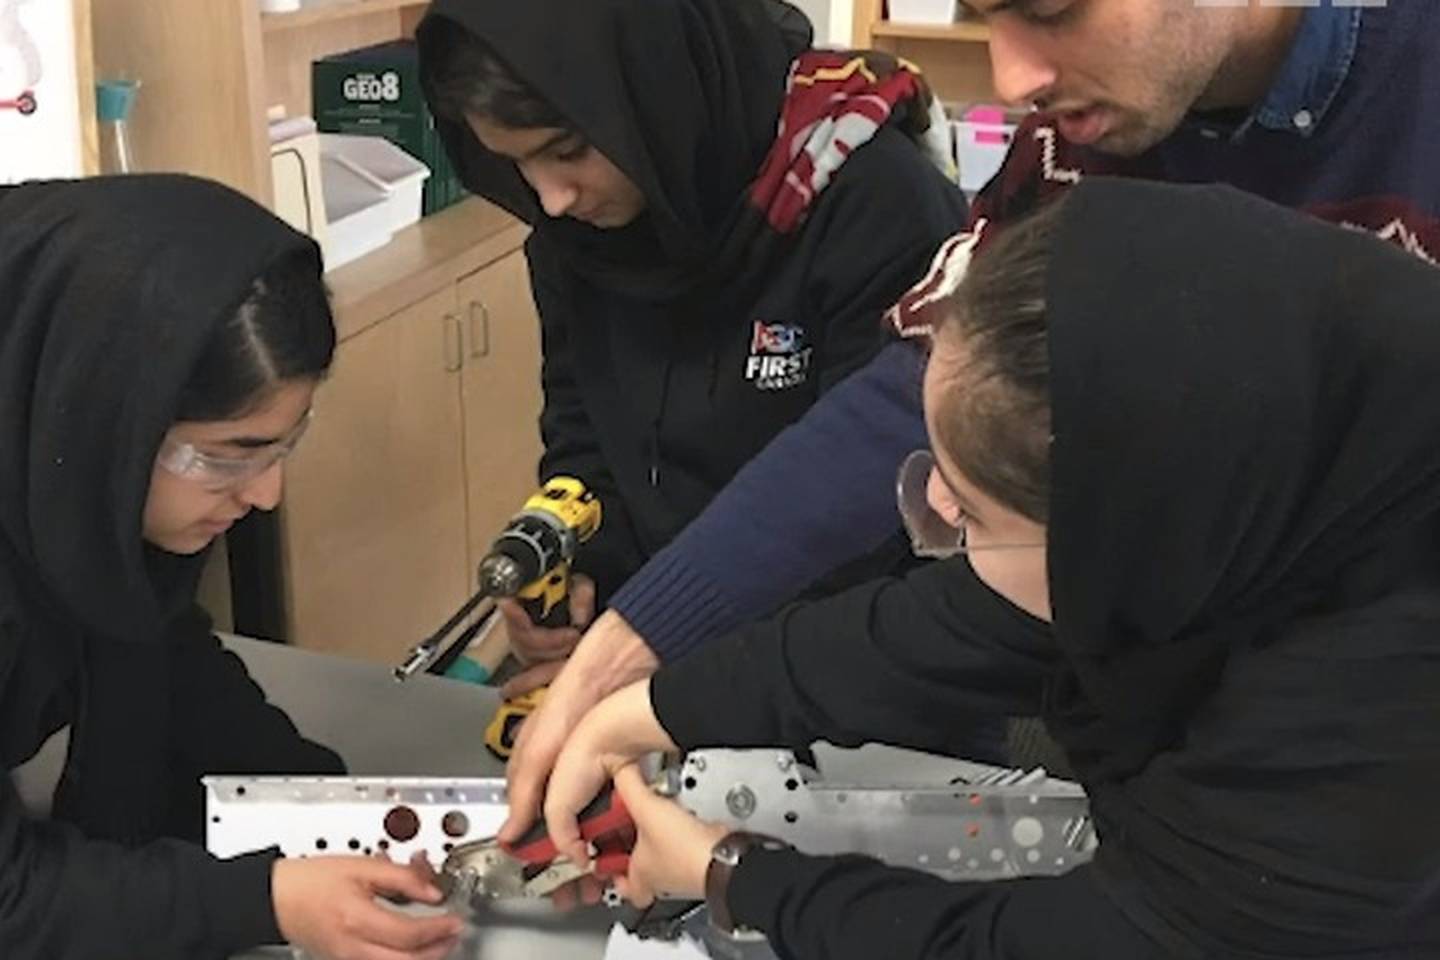 Afghan girls design ventilator prototypes